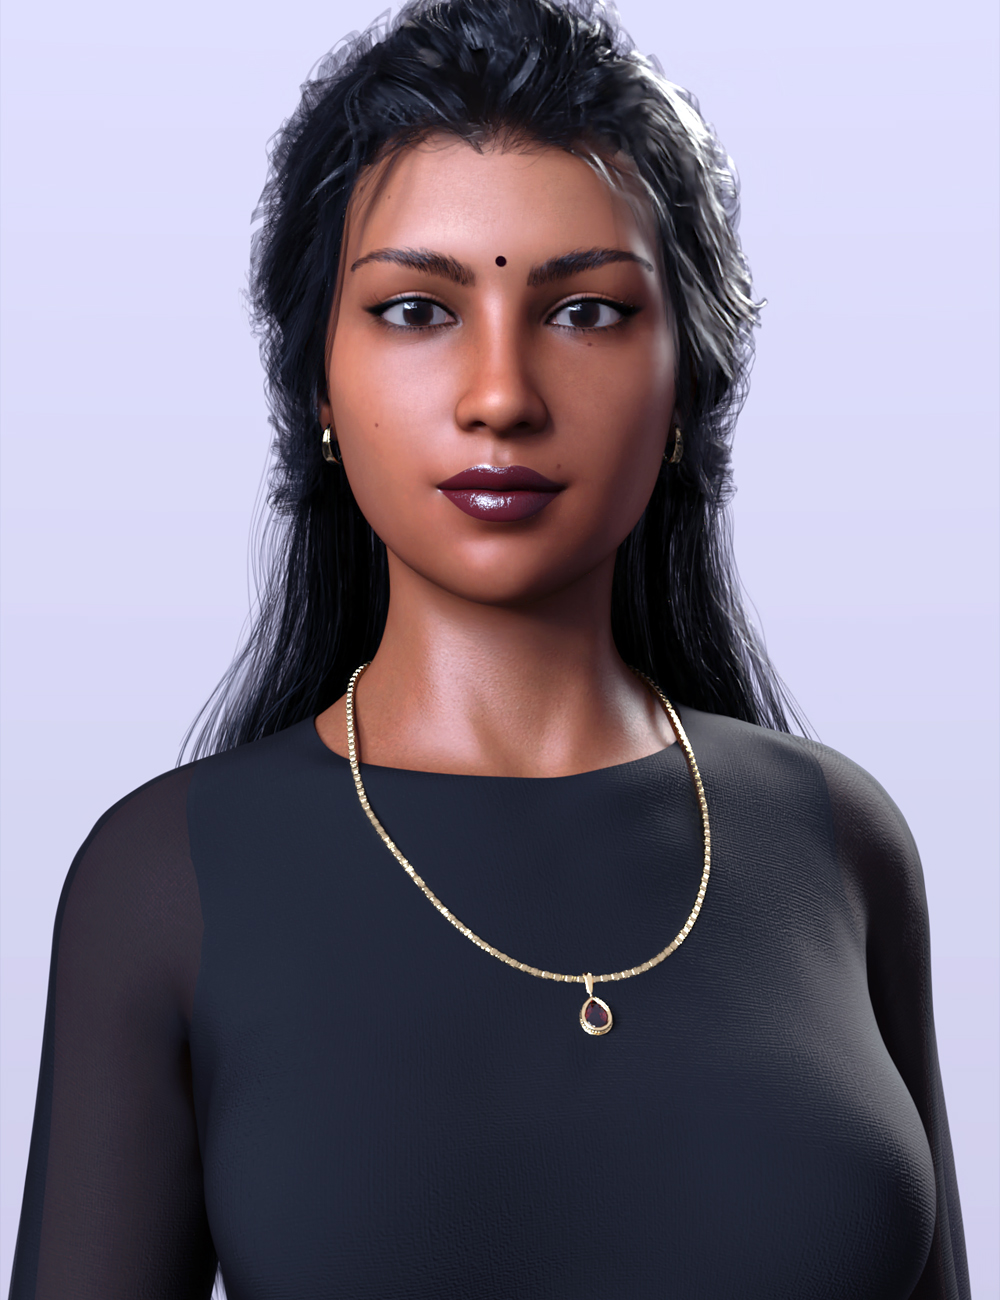 Priya for Genesis 8 and 8.1 Female by: , 3D Models by Daz 3D